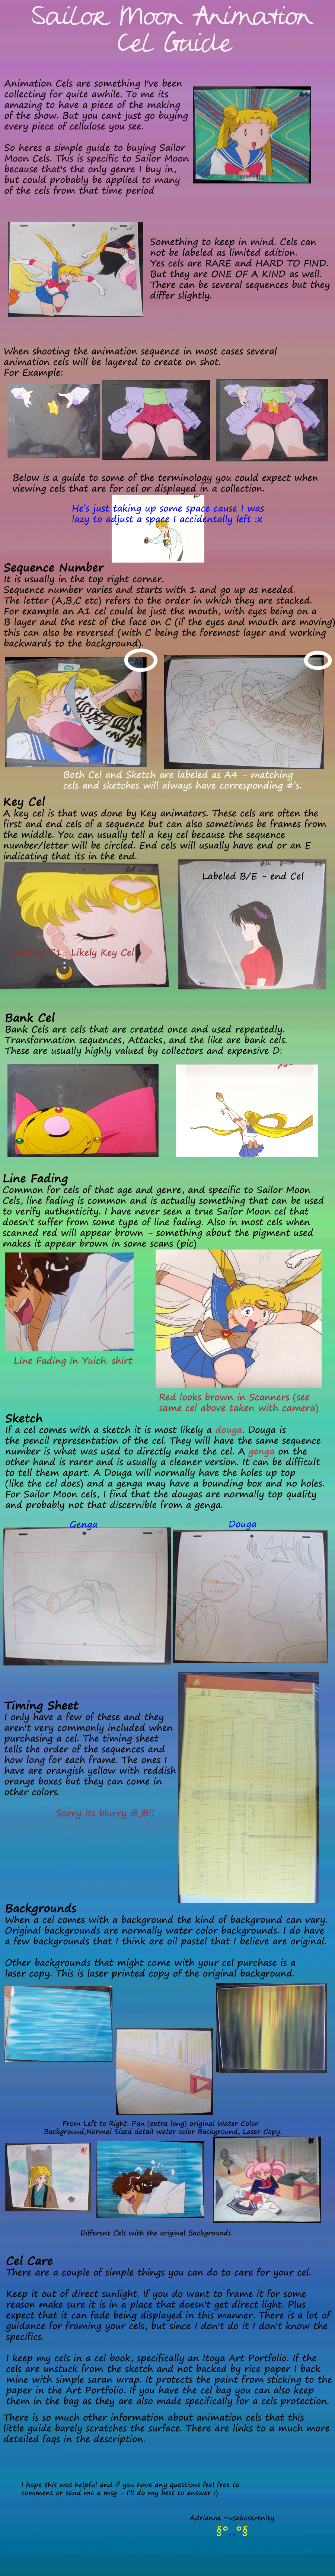 SailorMoon Animation Cel Guide